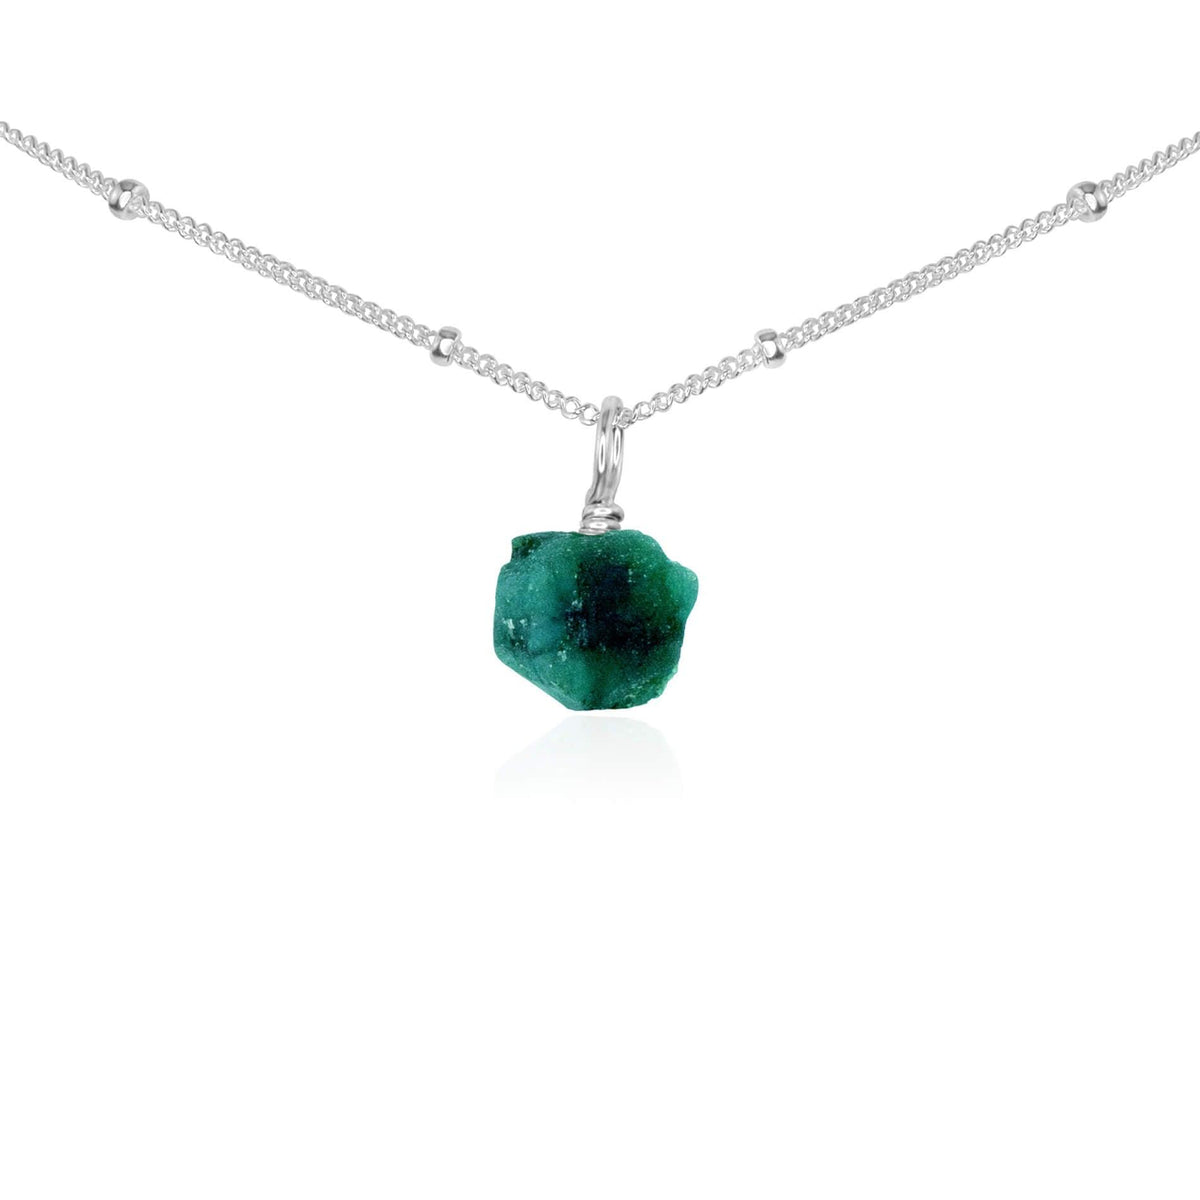 Tiny Rough Emerald Gemstone Pendant Choker - Tiny Rough Emerald Gemstone Pendant Choker - Sterling Silver / Satellite - Luna Tide Handmade Crystal Jewellery